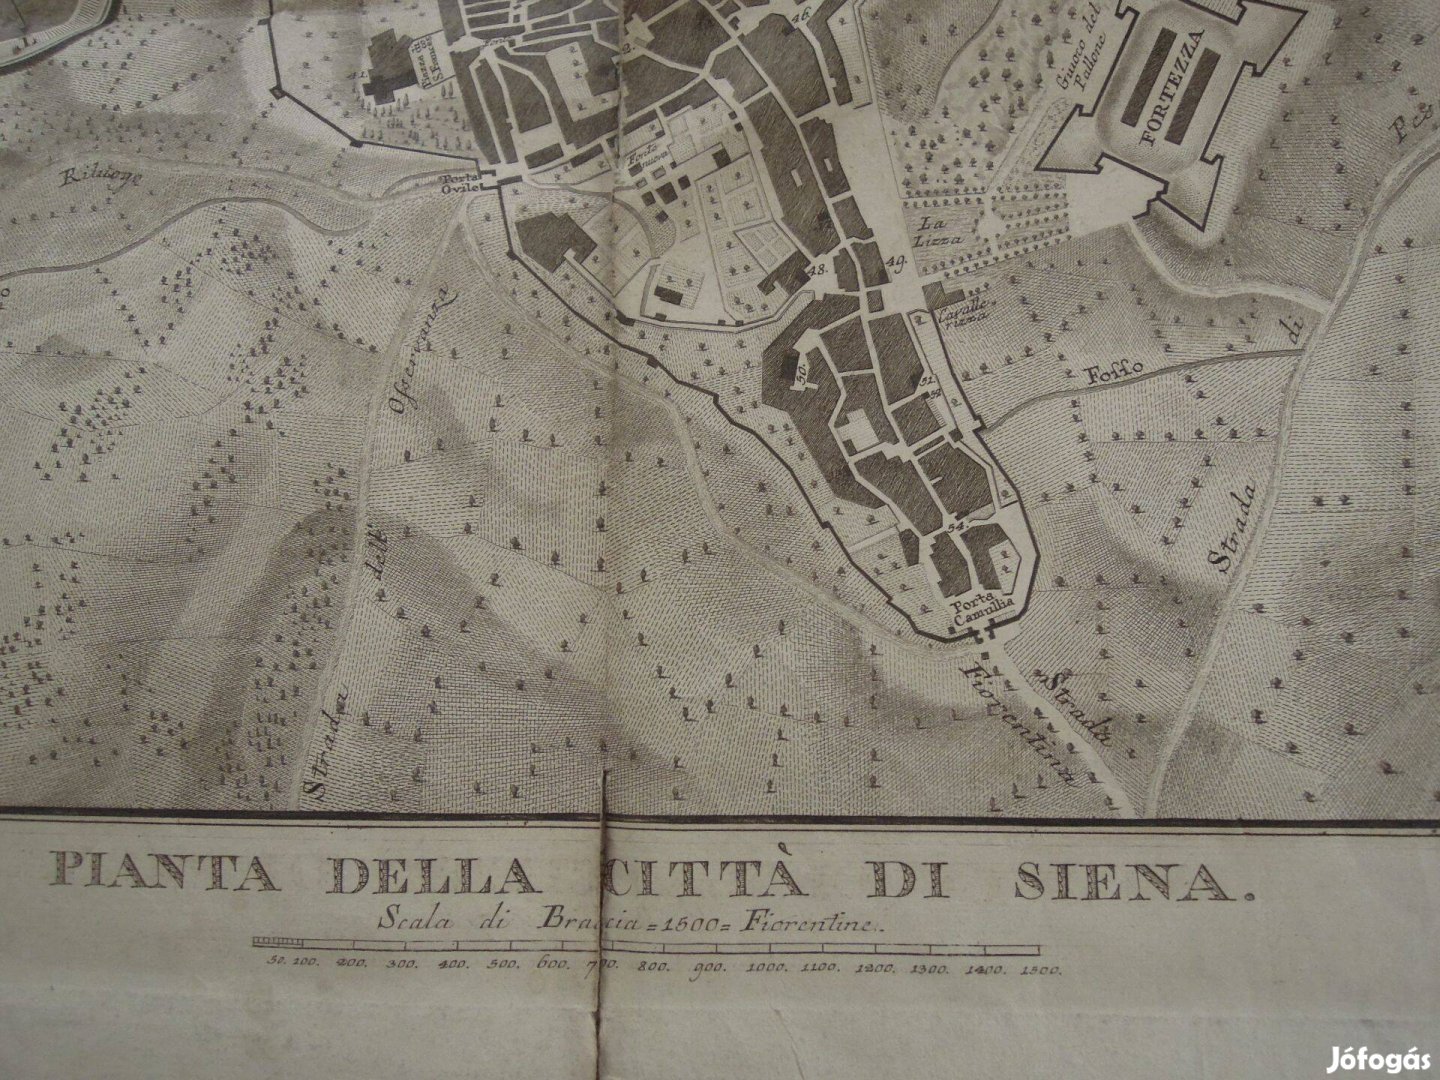 Térkép, Siena koraközépkori Planta della citta di Siena